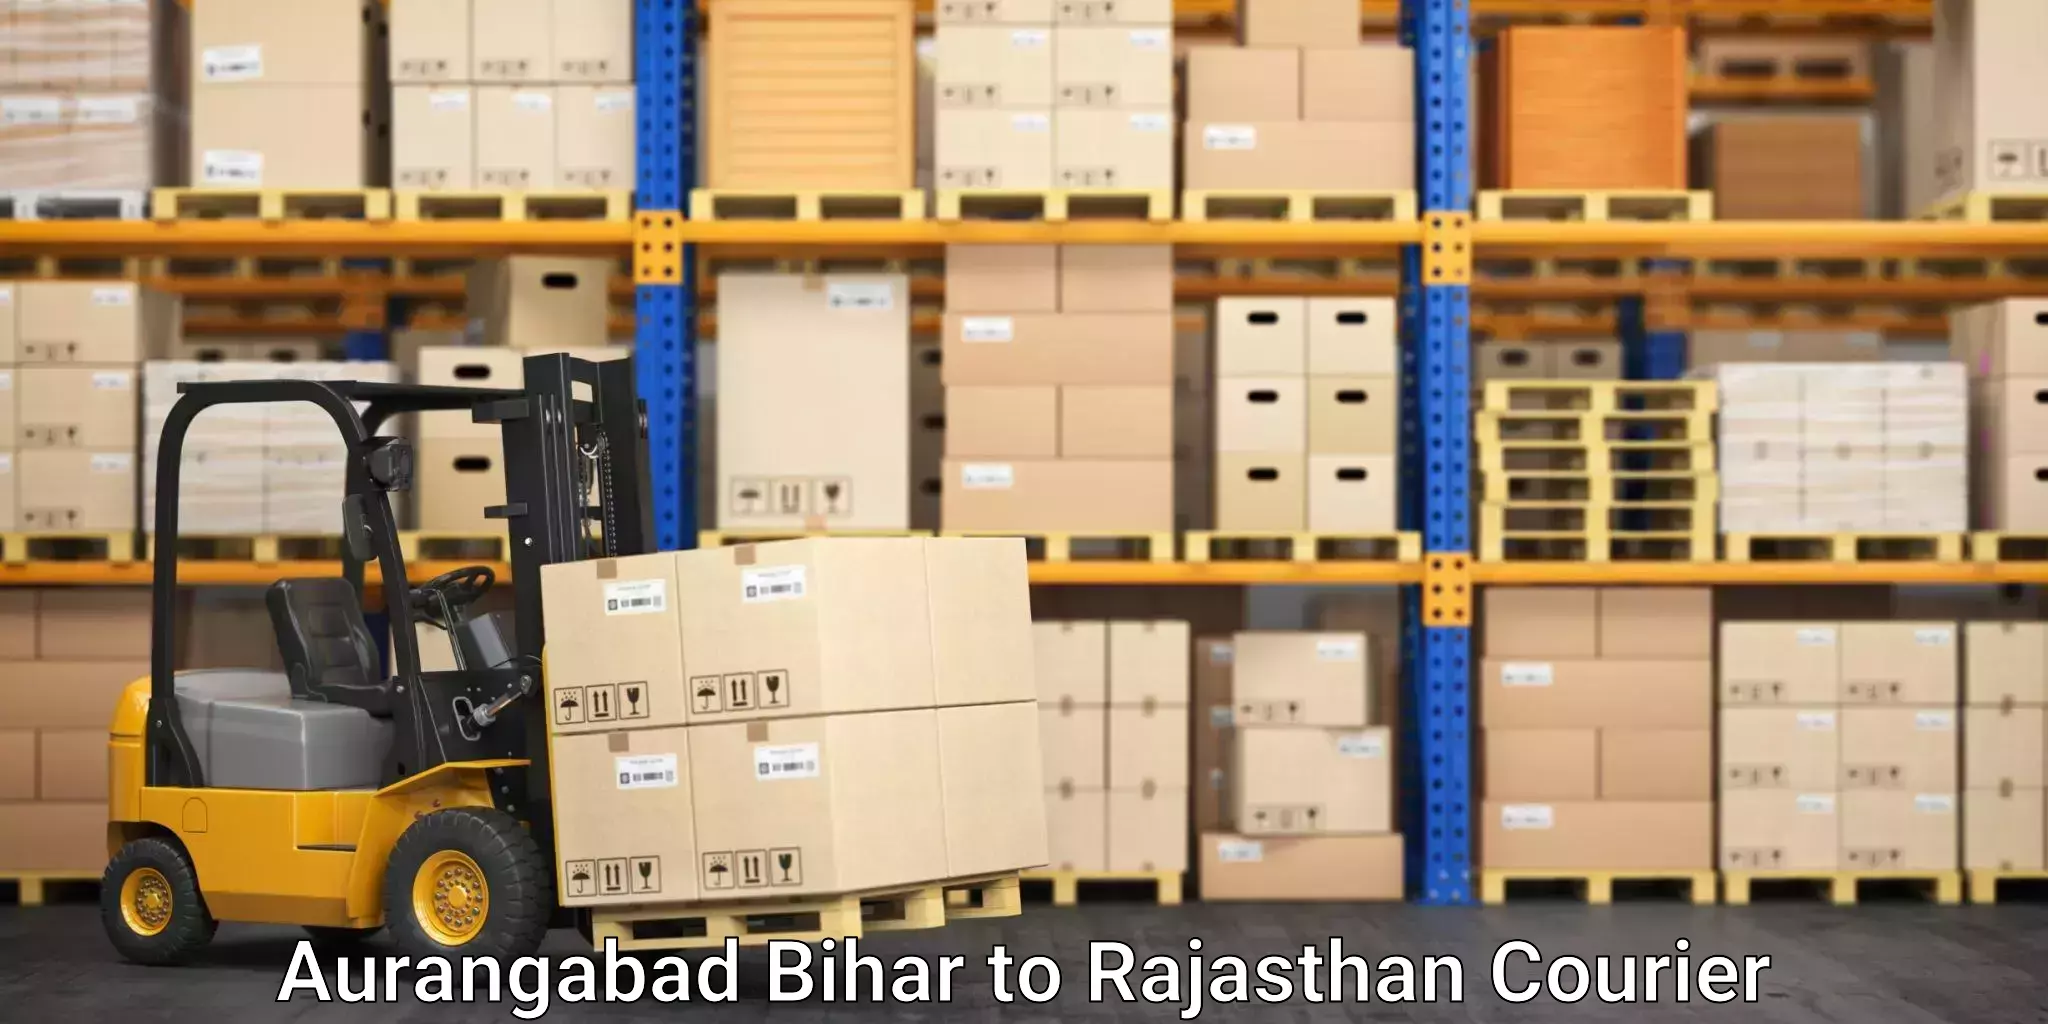 Quality relocation services Aurangabad Bihar to Rajasthan